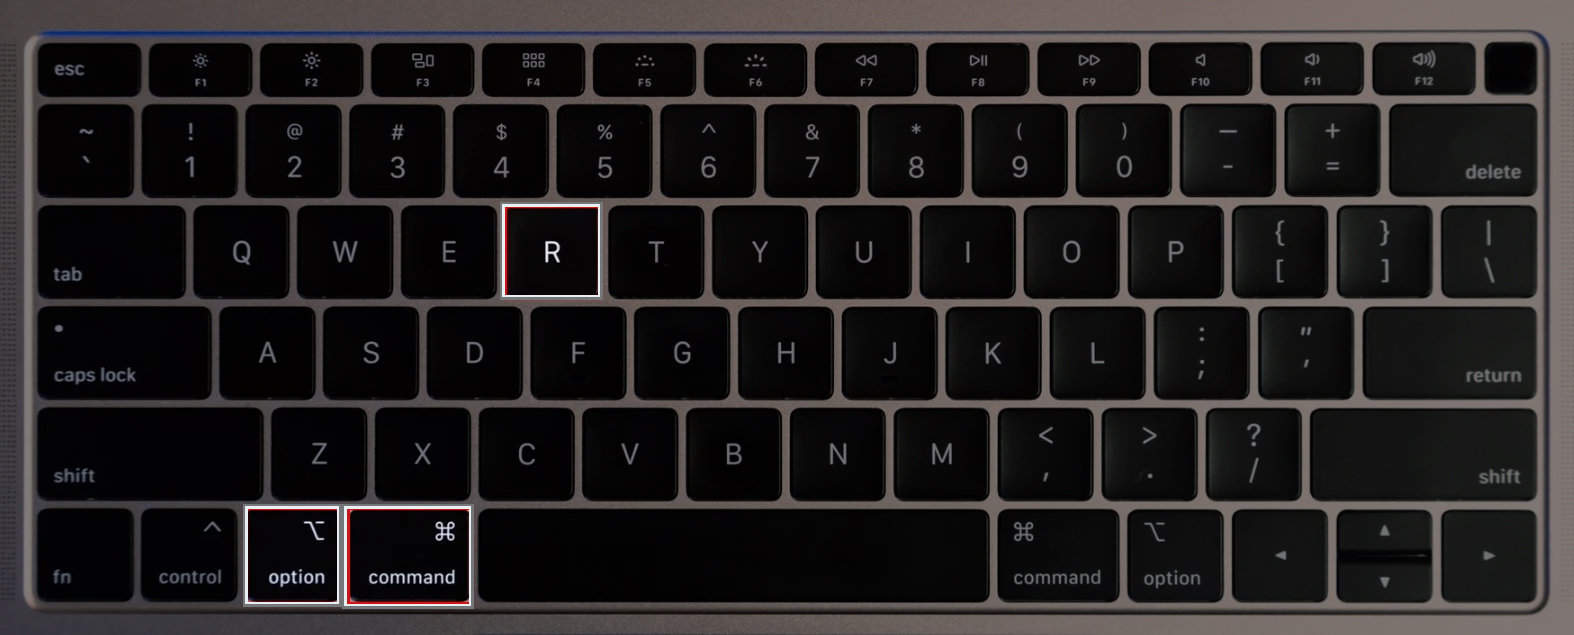 diff-key-combo-on-mac 1